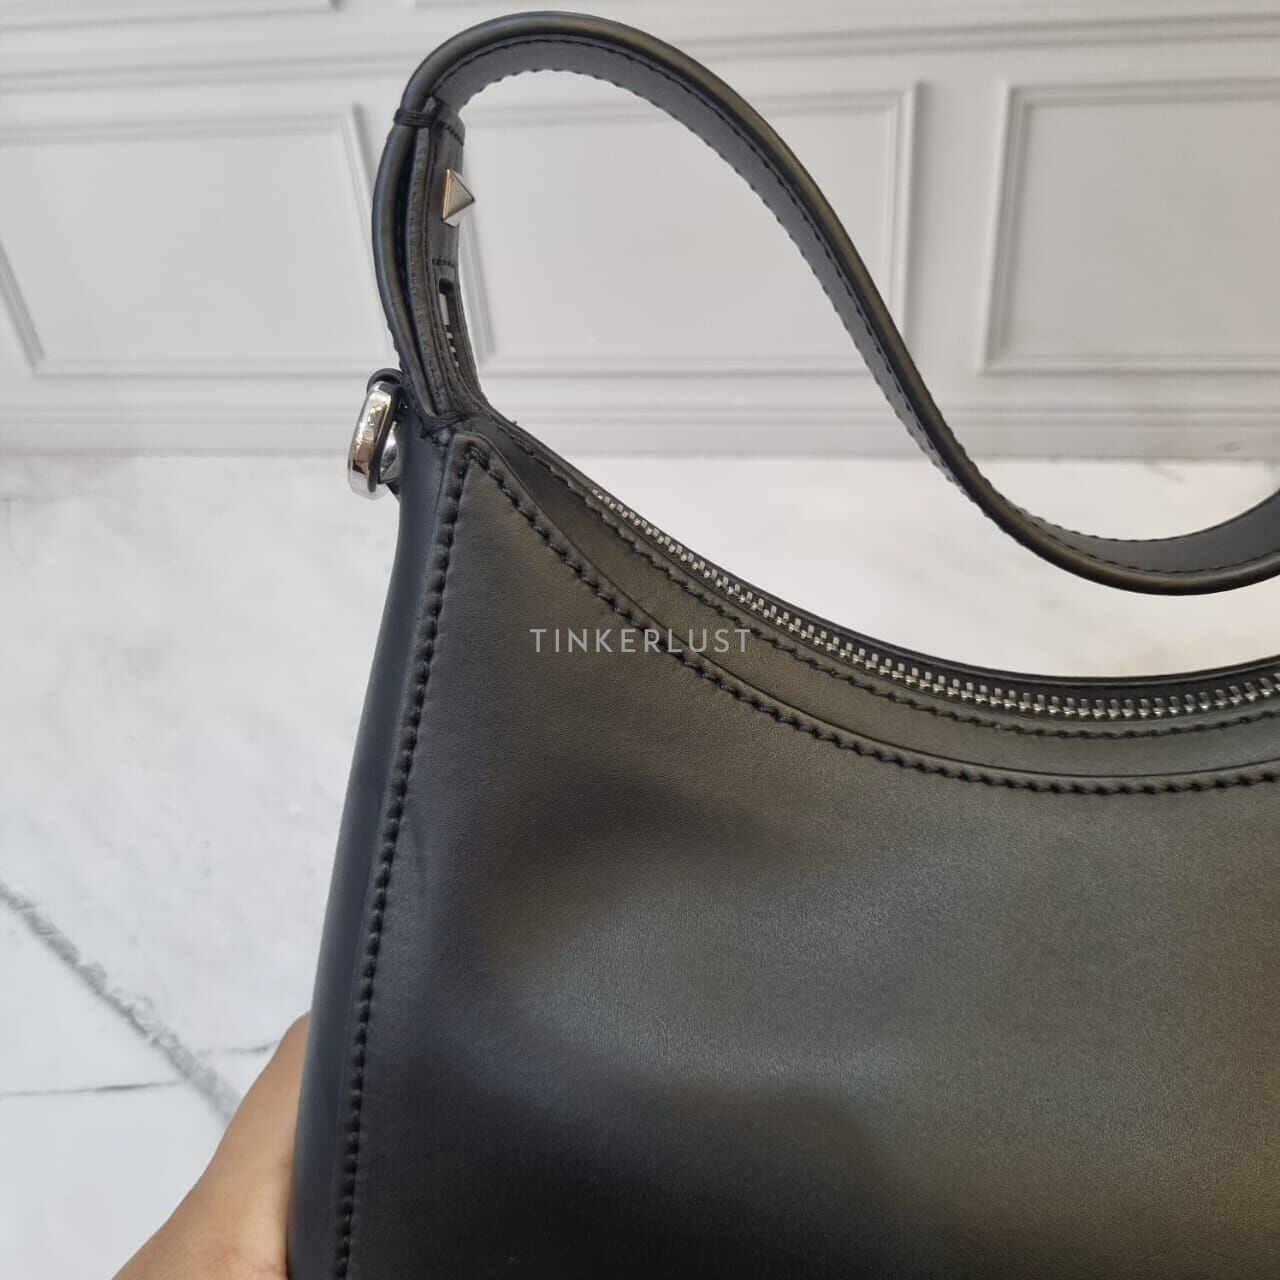 Valentino Garavani VLTN Leather Hobo Bag Black Logo White SHW Shoulder Bag